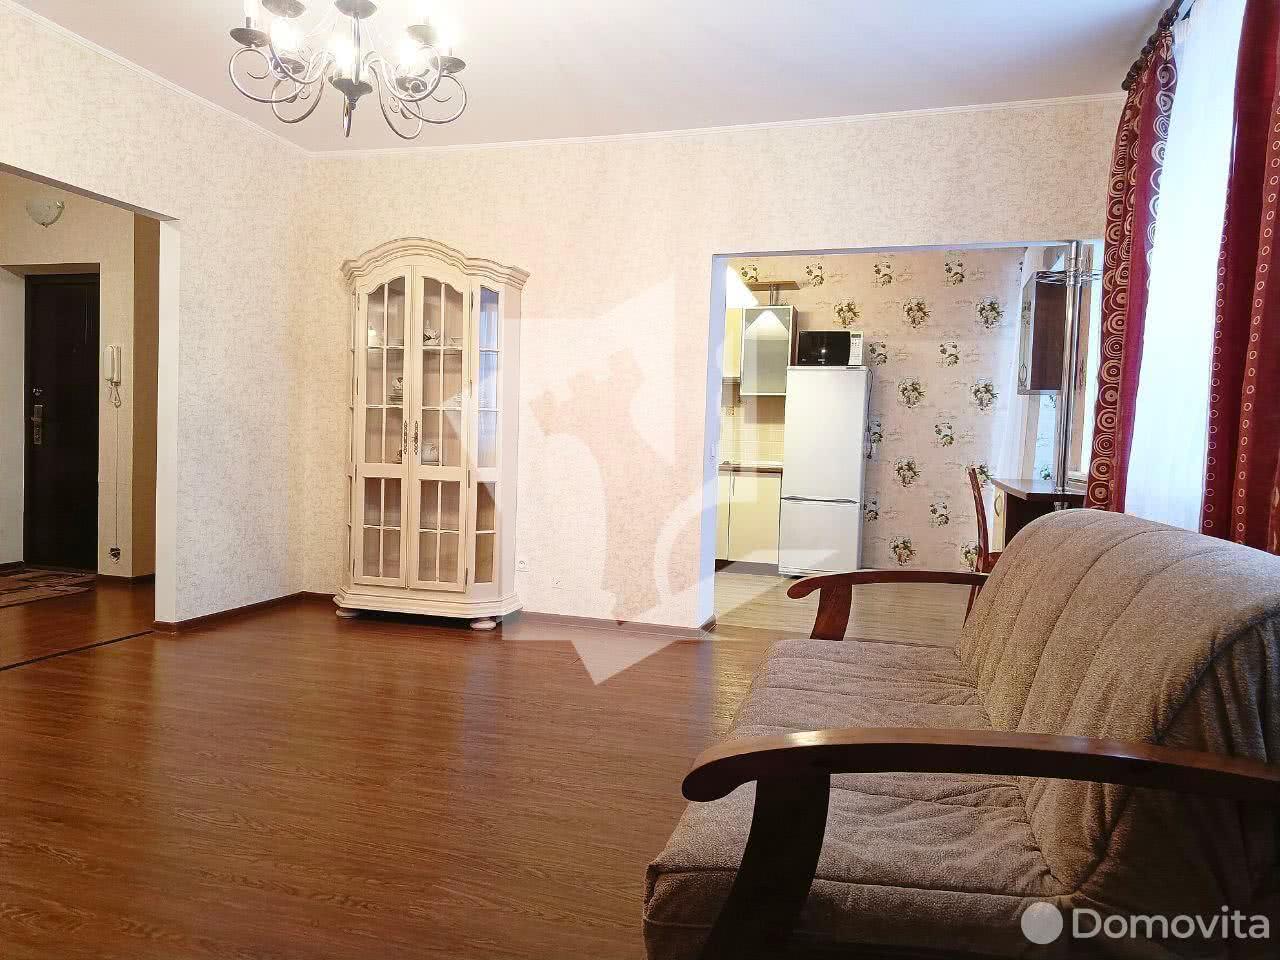 квартира, Минск, ул. Захарова, д. 67/1, стоимость аренды 1 895 р./мес.